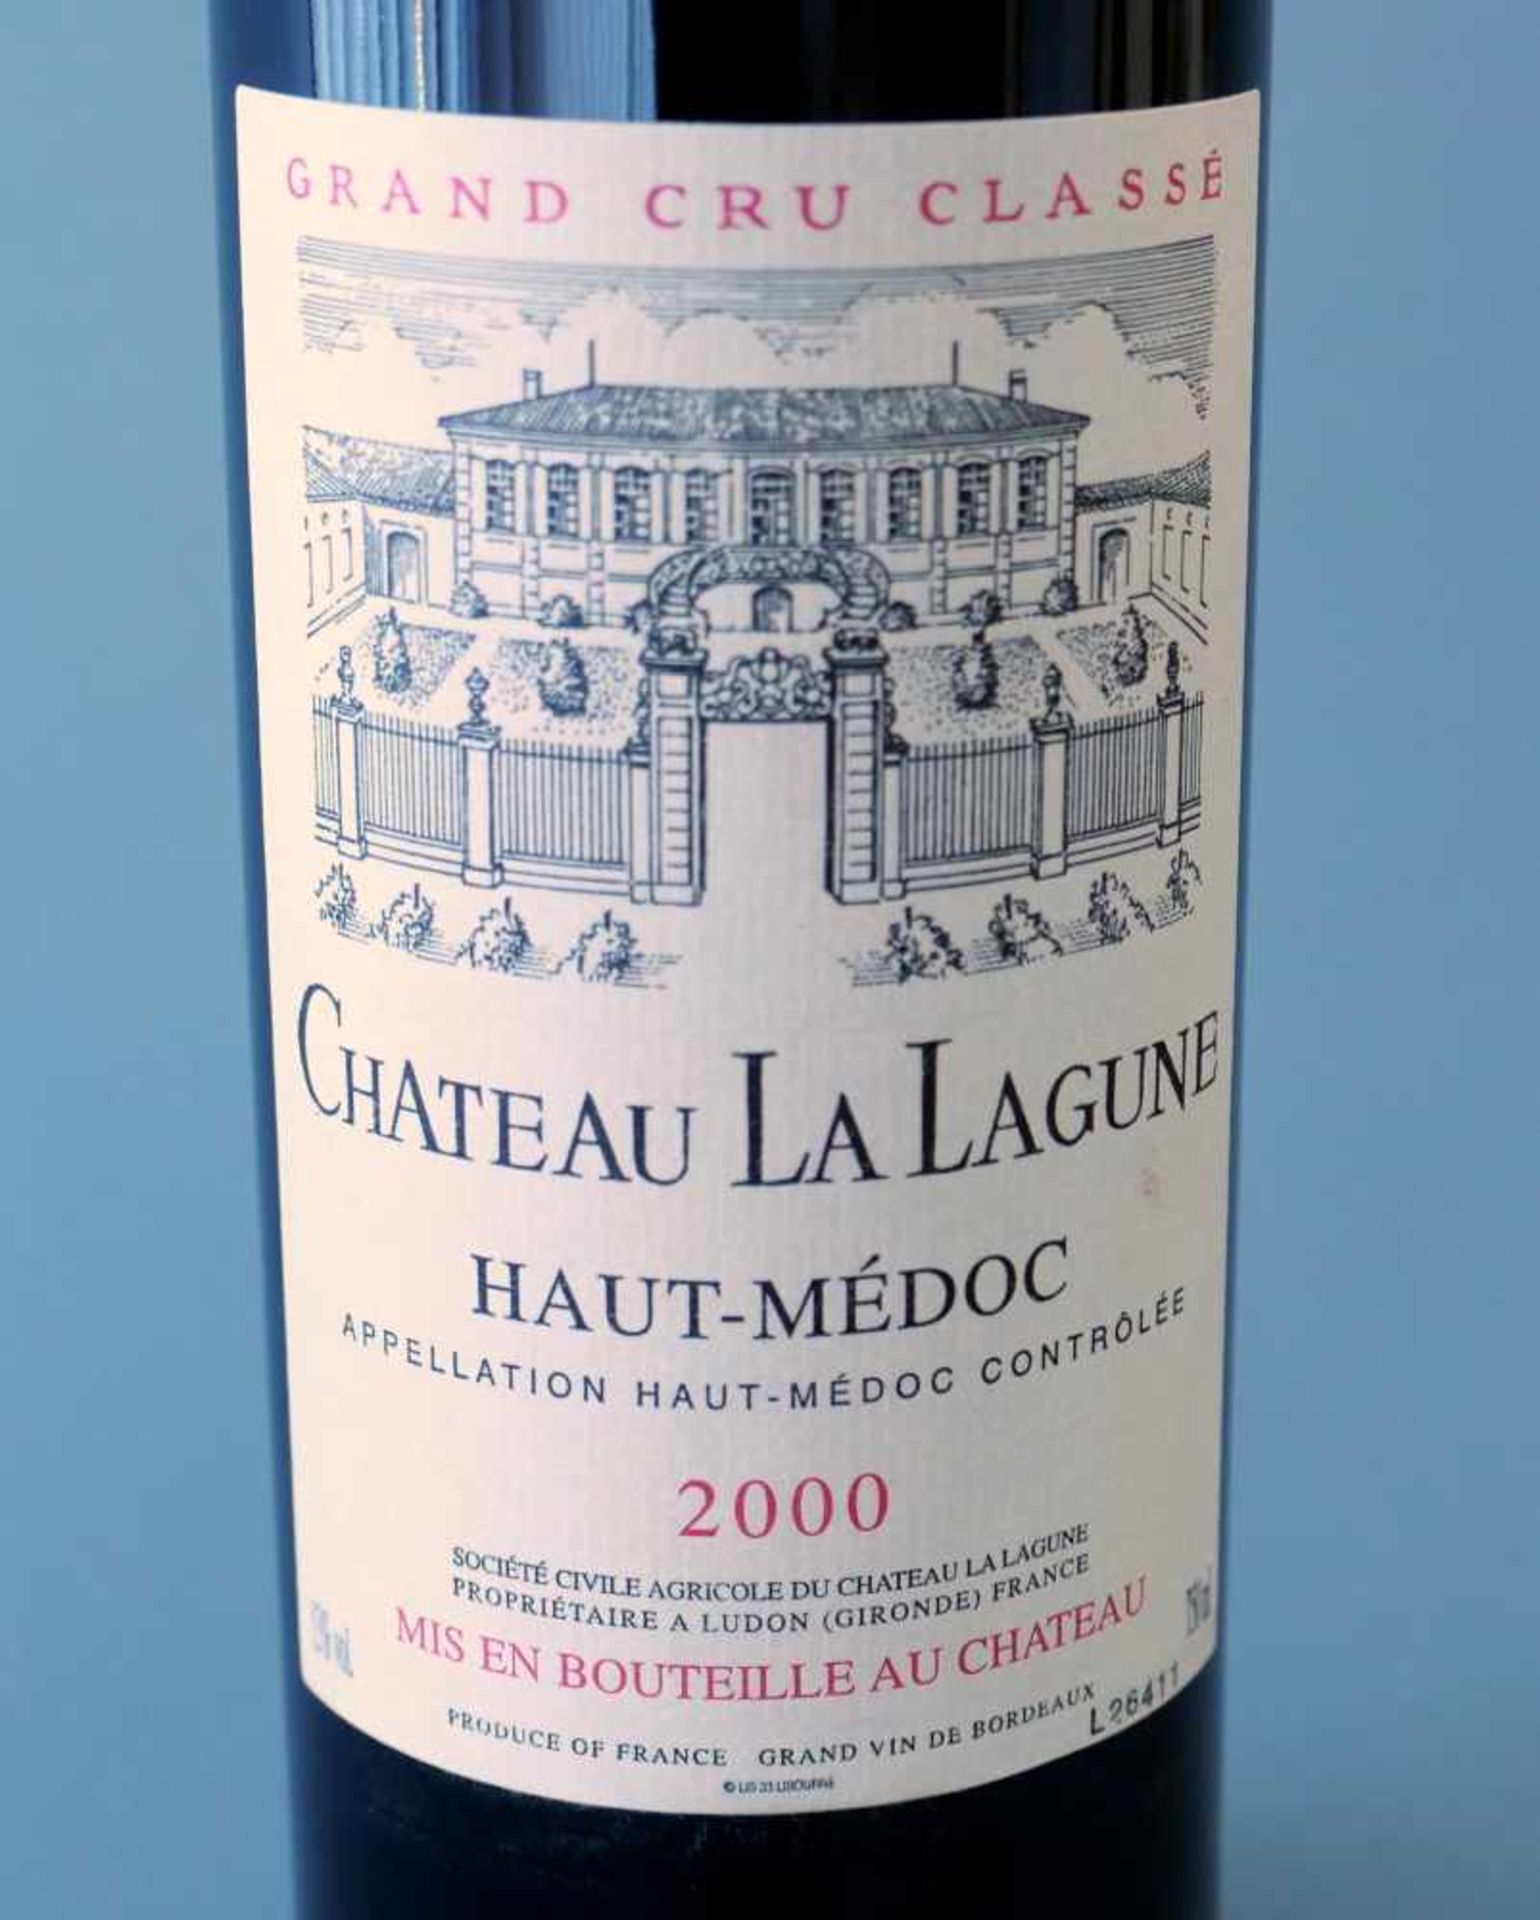 Chateau La LaguneGrand Cru Classé, Jahrgang 2000, Inhalt 750 ml. Ludon-Médoc, Gironde, - Bild 2 aus 2